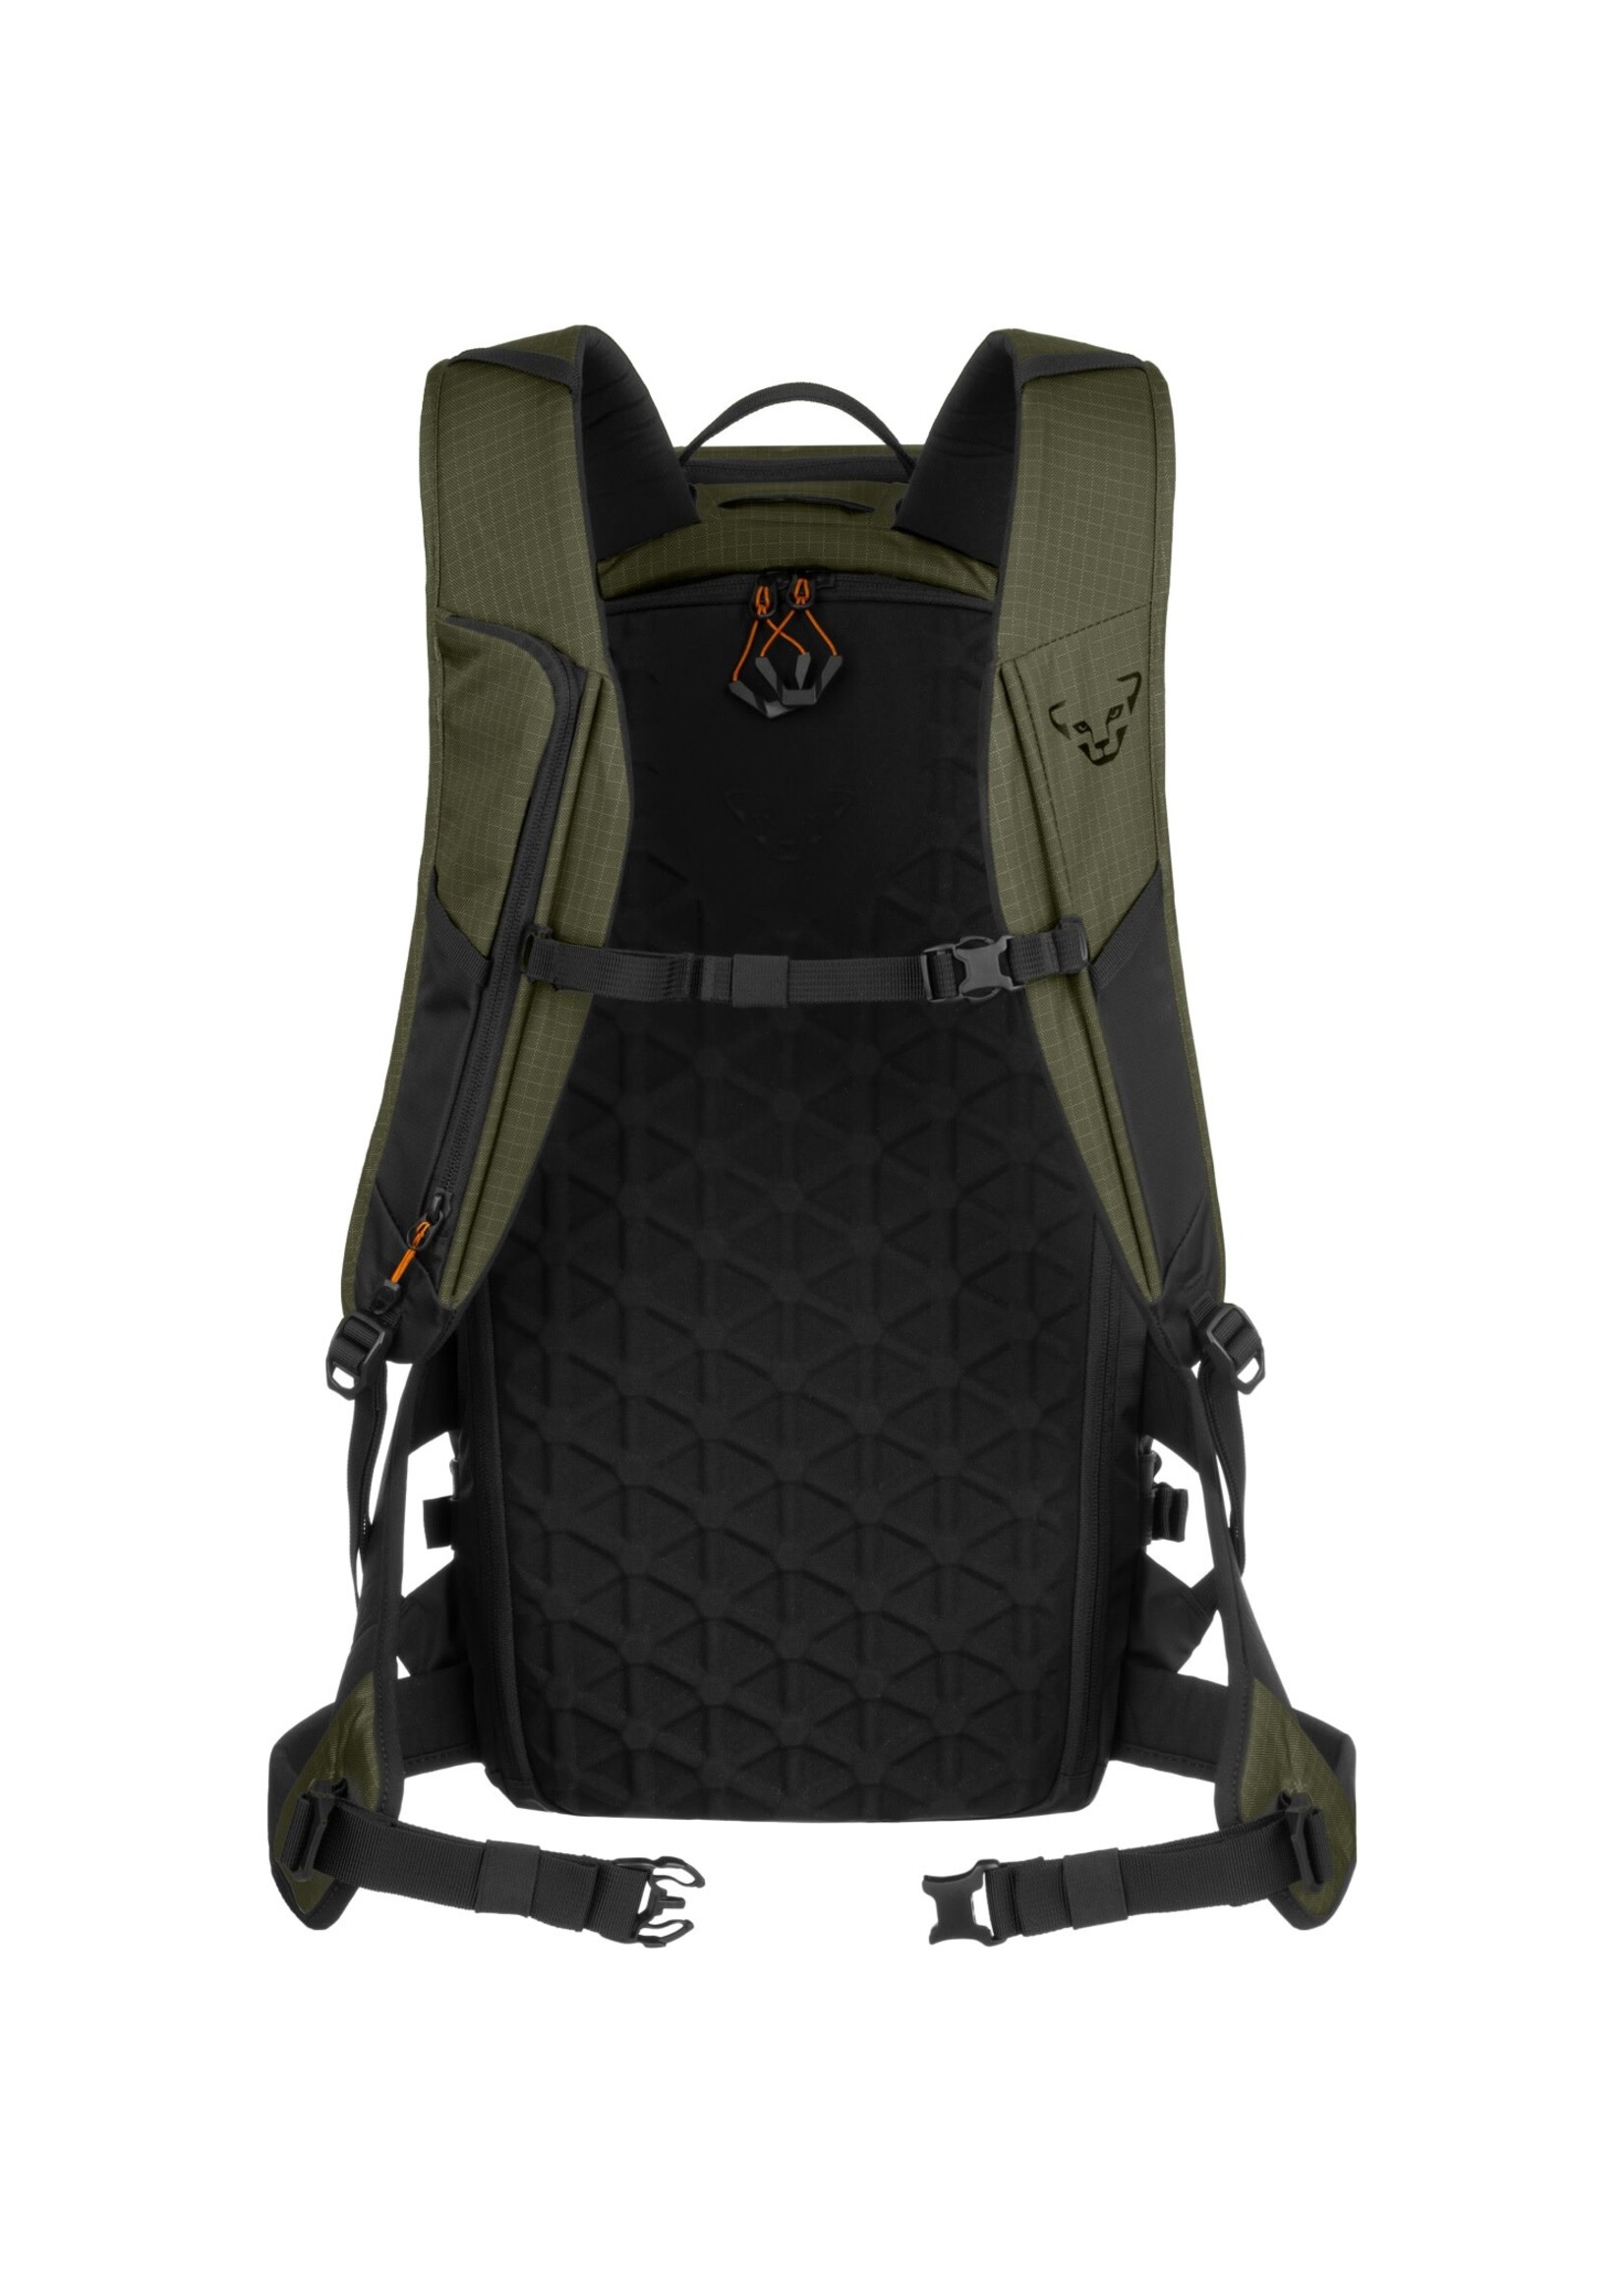 Dynafit Tigard 24 Backpack Addiction Vertical - | Vertical Addiction